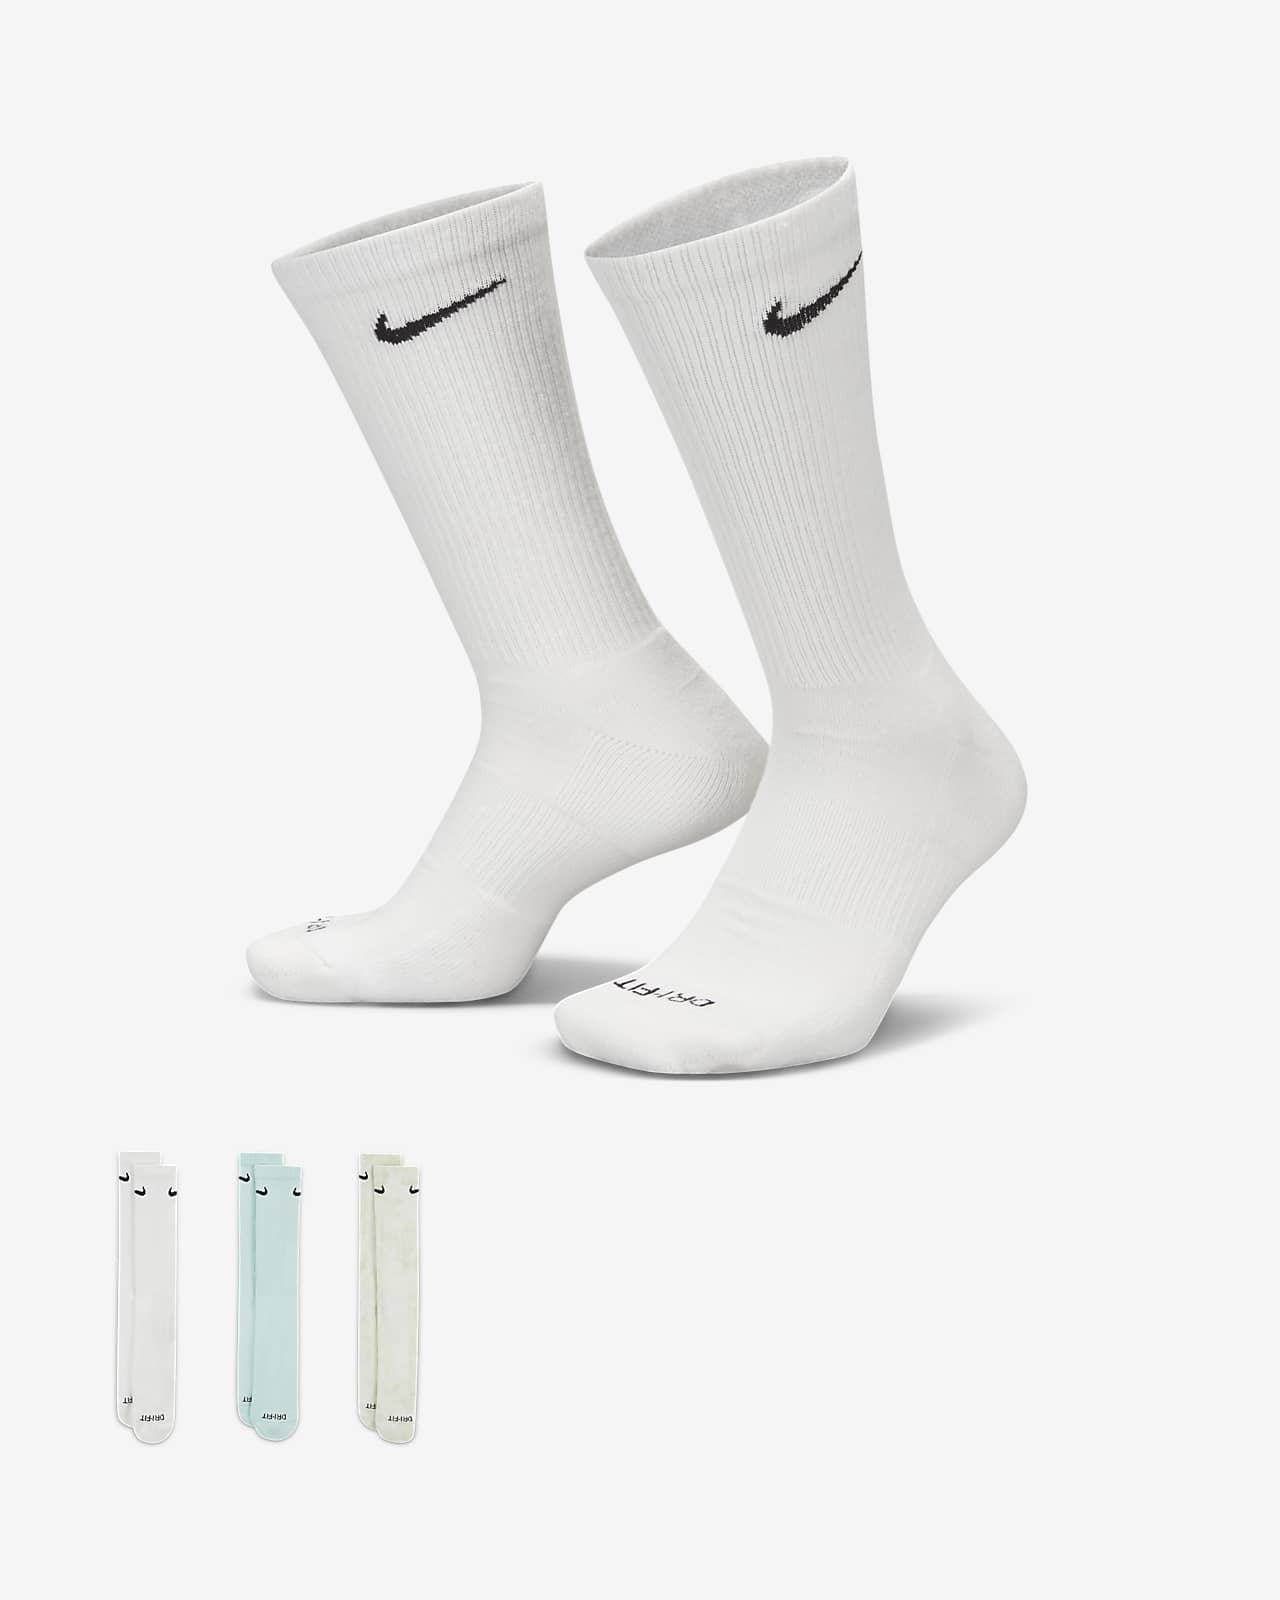 Plus Socks Everyday Crew Nike (3 Cushioned Pairs).